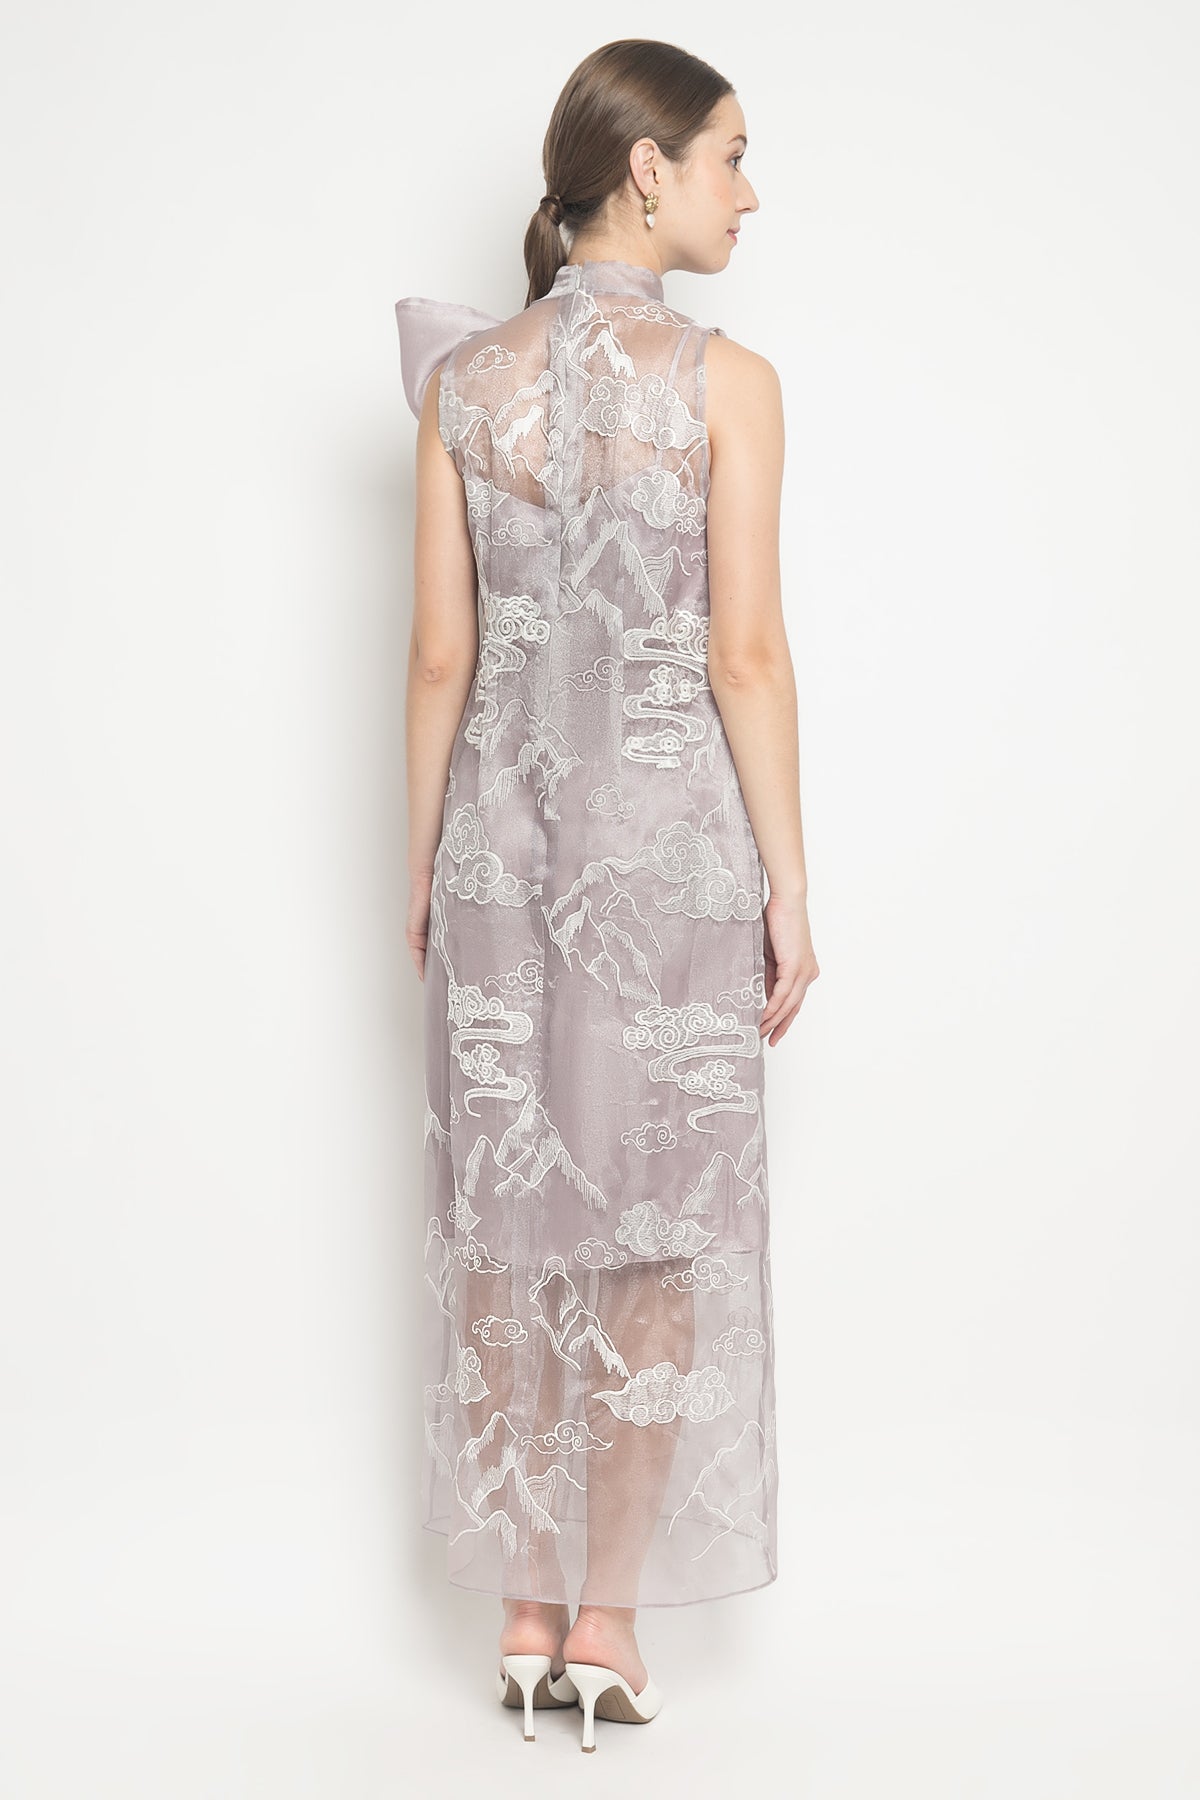 Sinergi Dress Set 02 in Lilac White